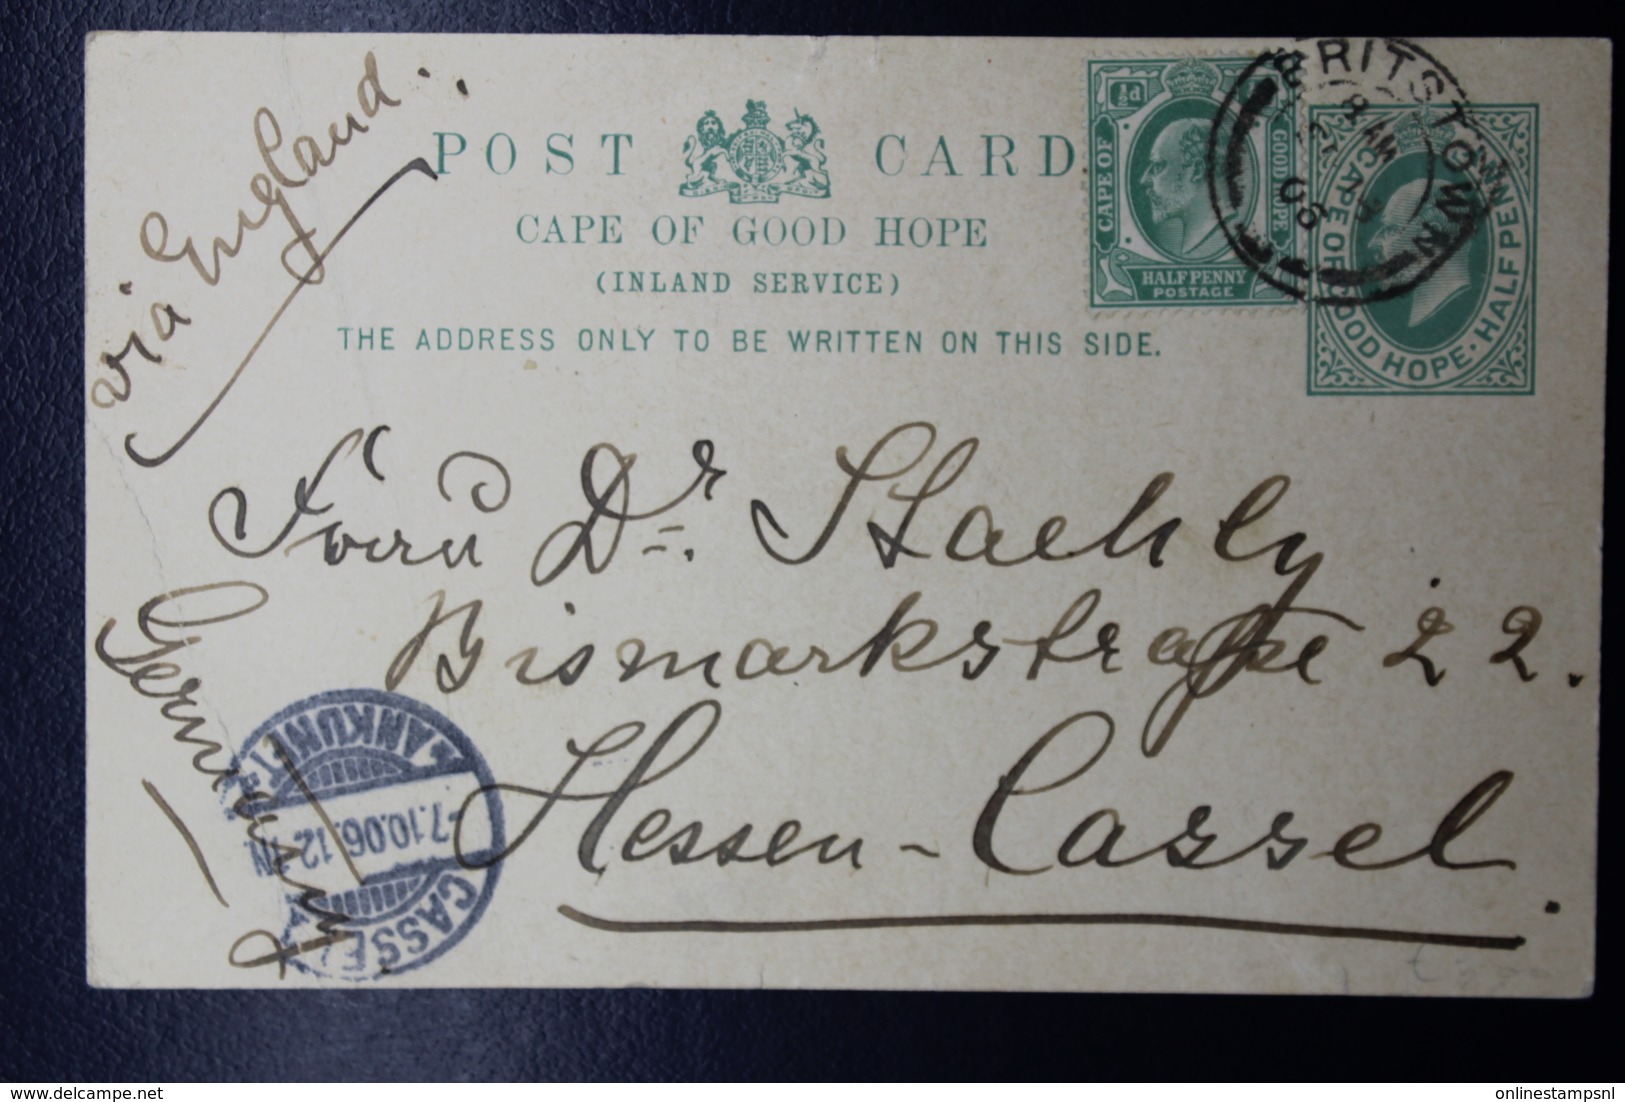 Cape Of Good Hope Uprated Postcard P17 Britstown -> Cassel Germany 1906 - Cabo De Buena Esperanza (1853-1904)